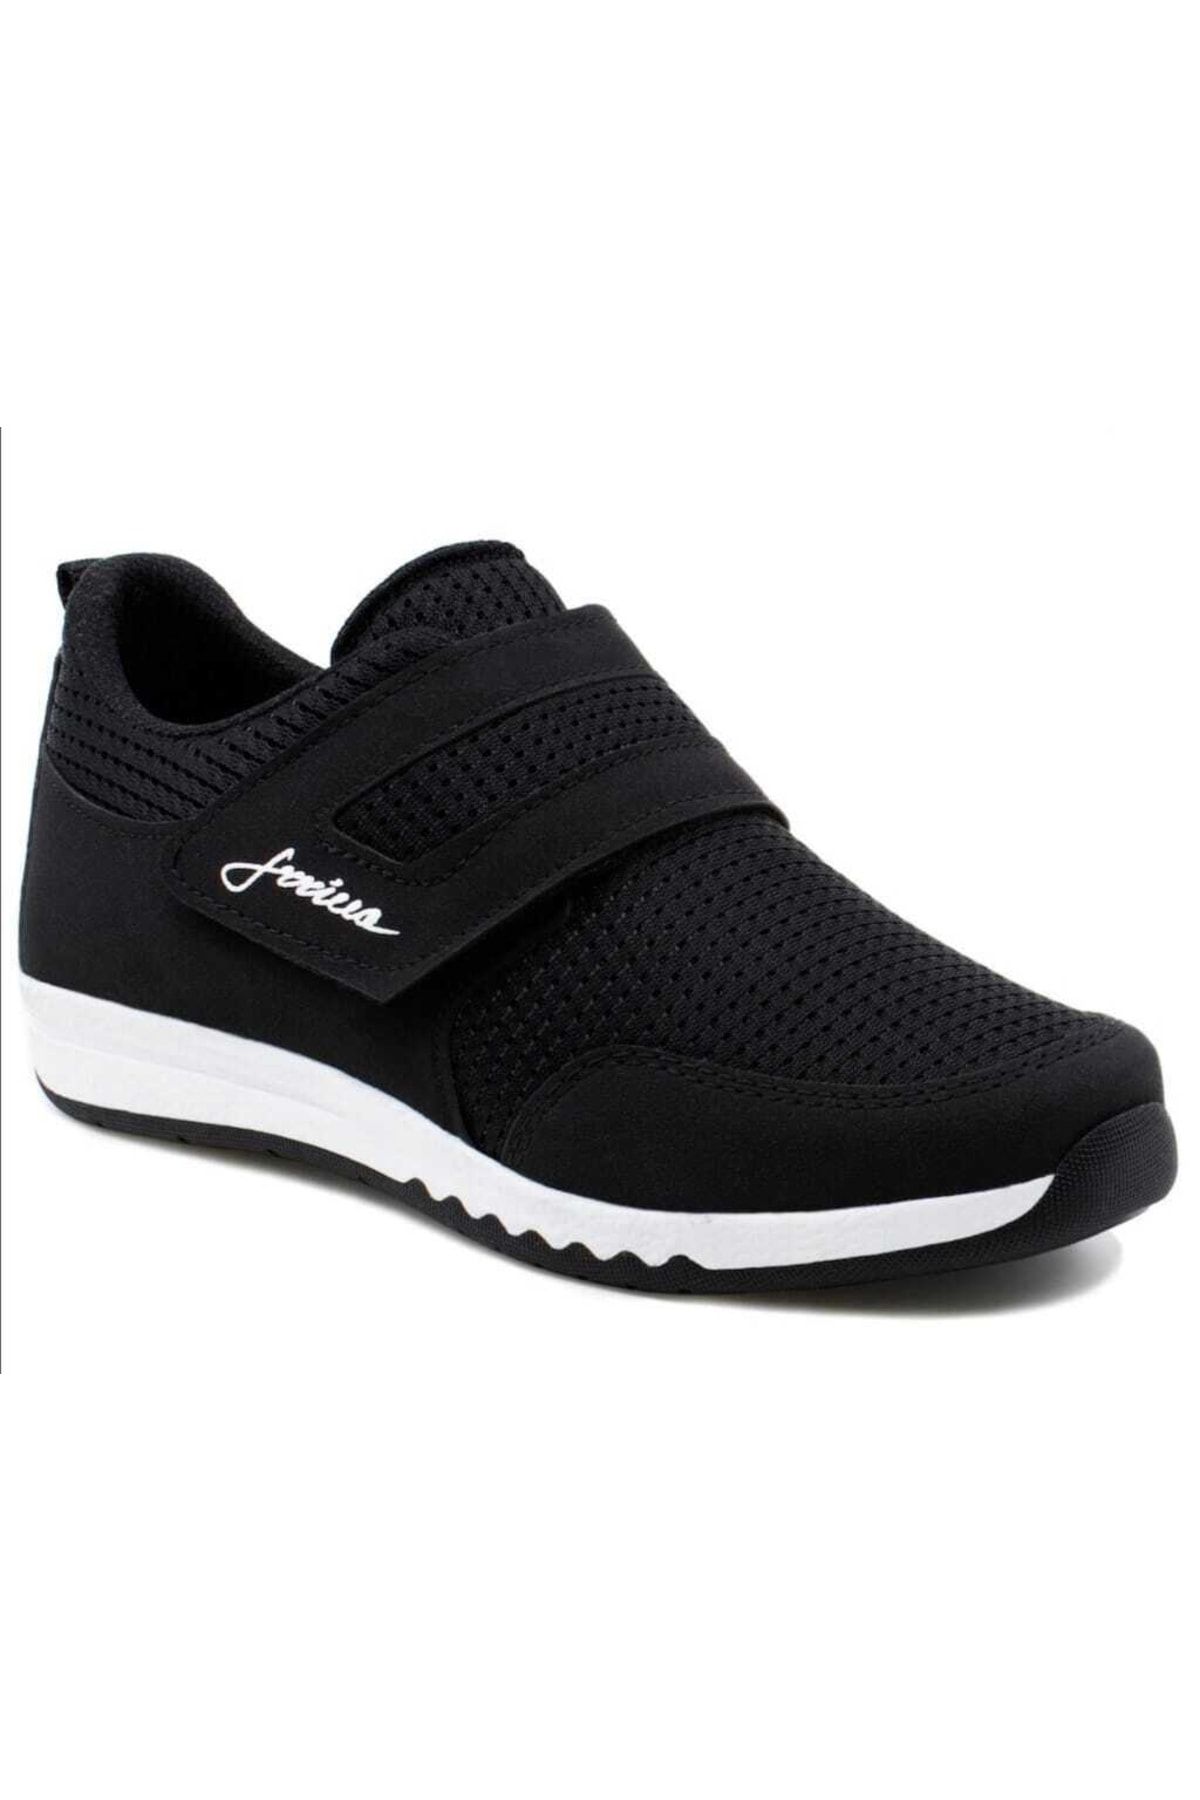 RavenShoes Unisex Siyah Raven Shoes Cırtlı Sneaker Spor Ayakkabı